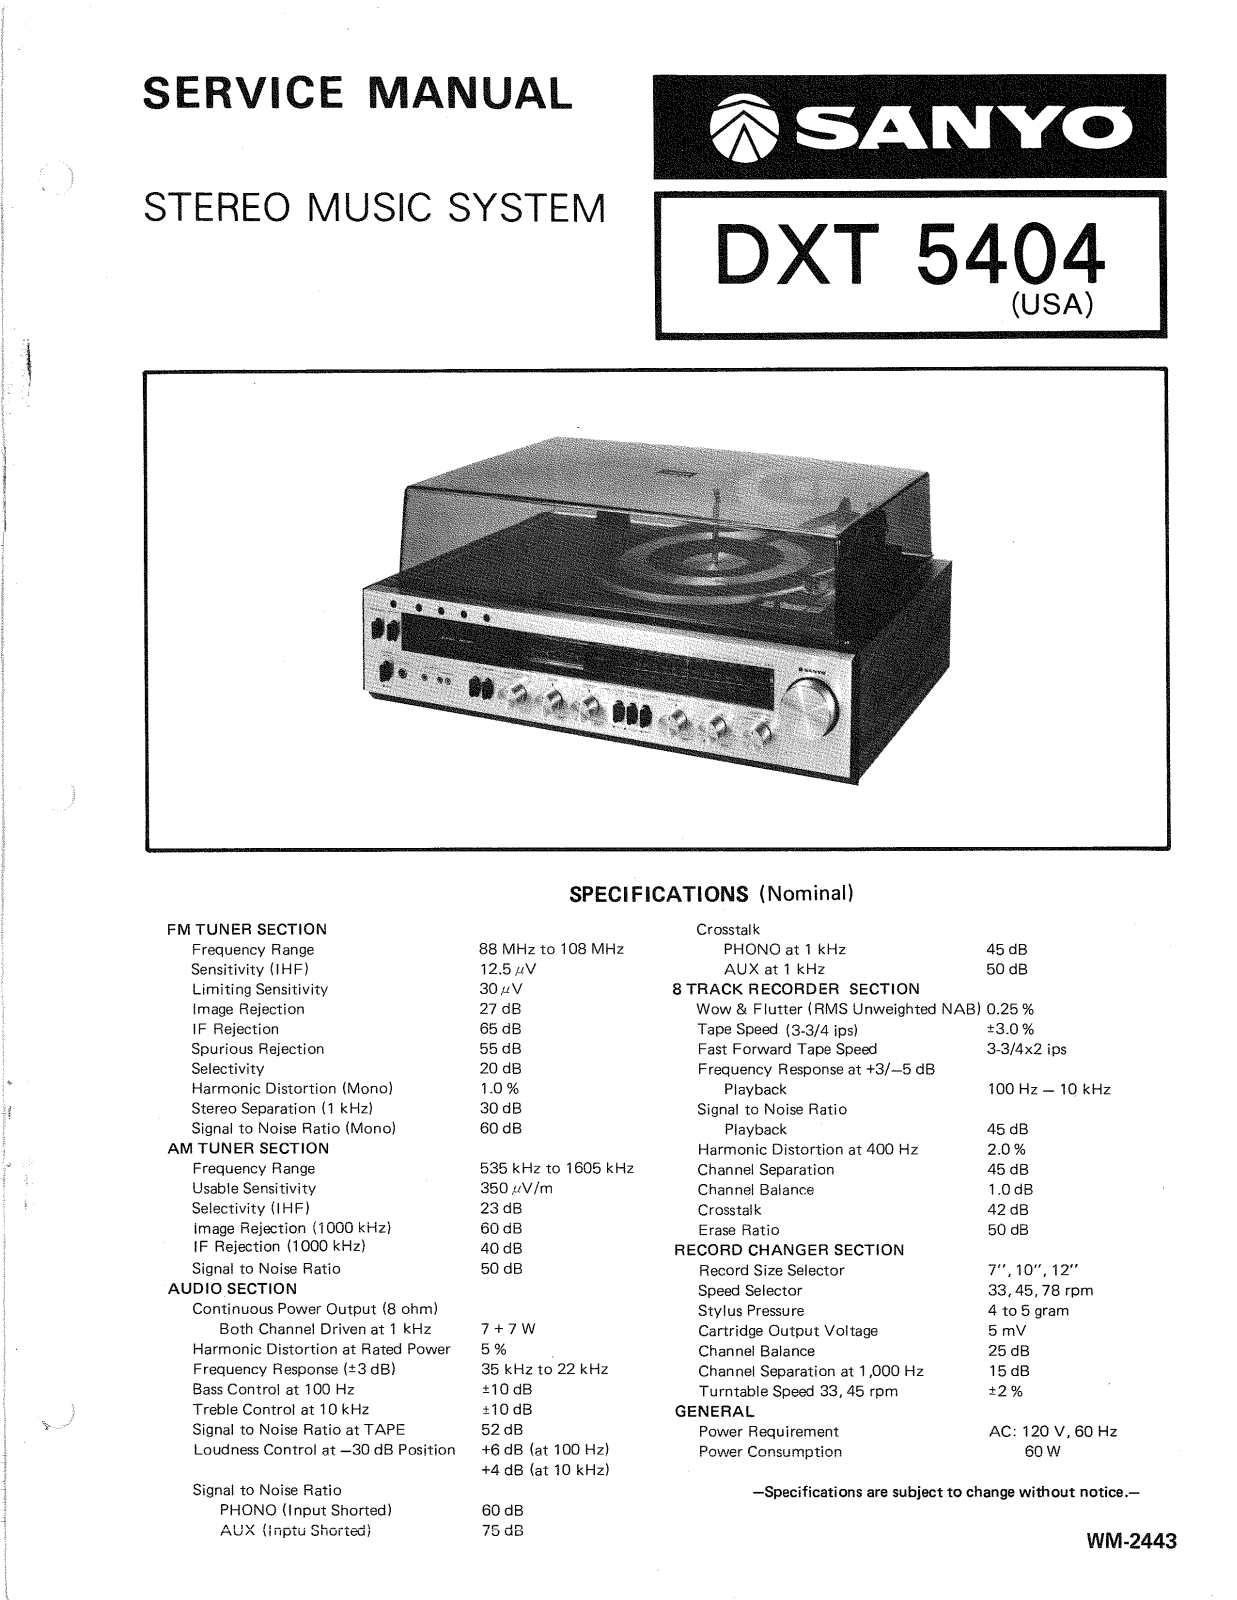 Sanyo DXT-5404 Service manual